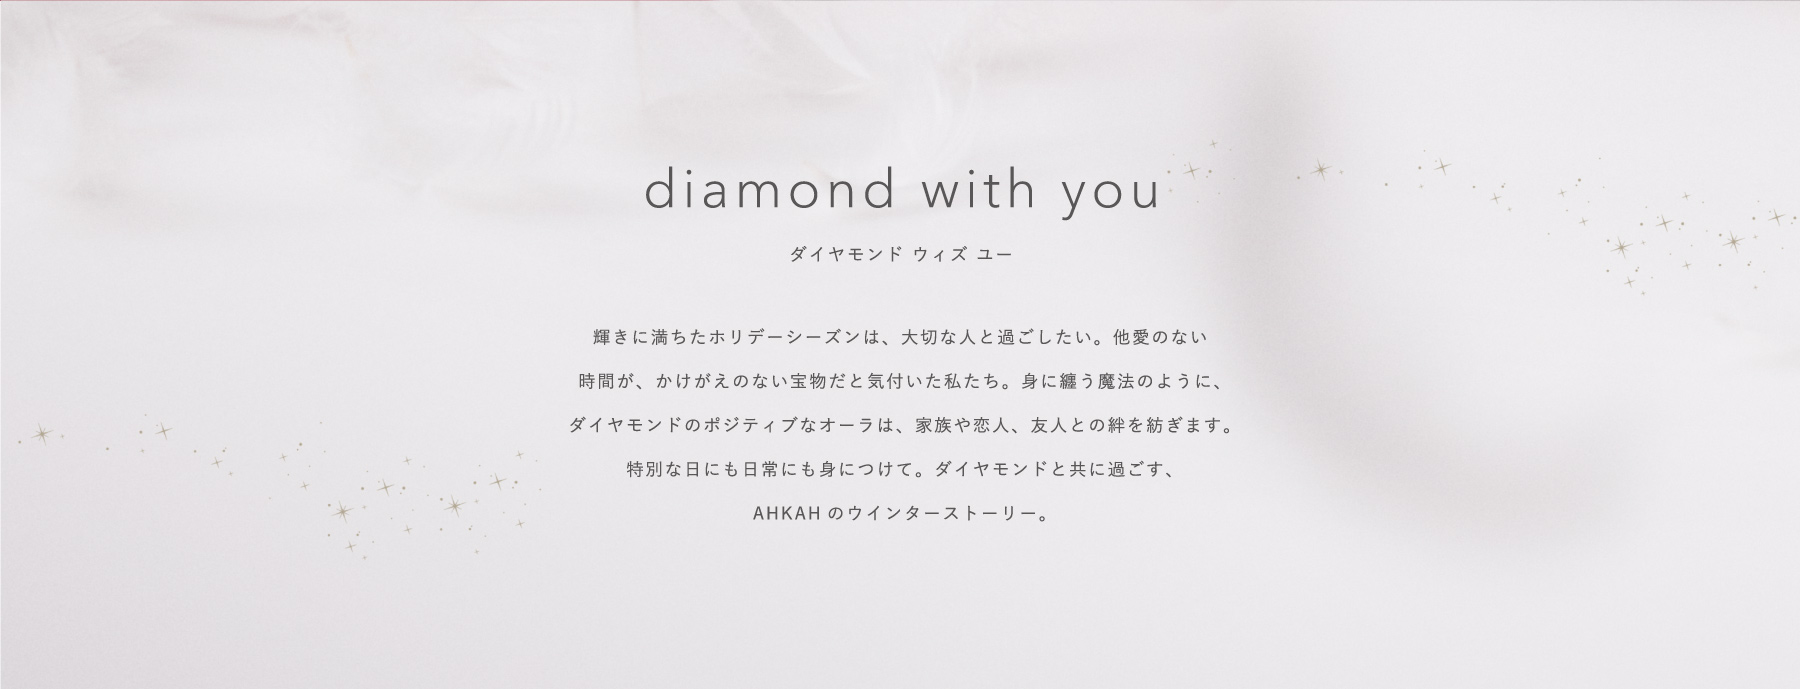 diamond with you